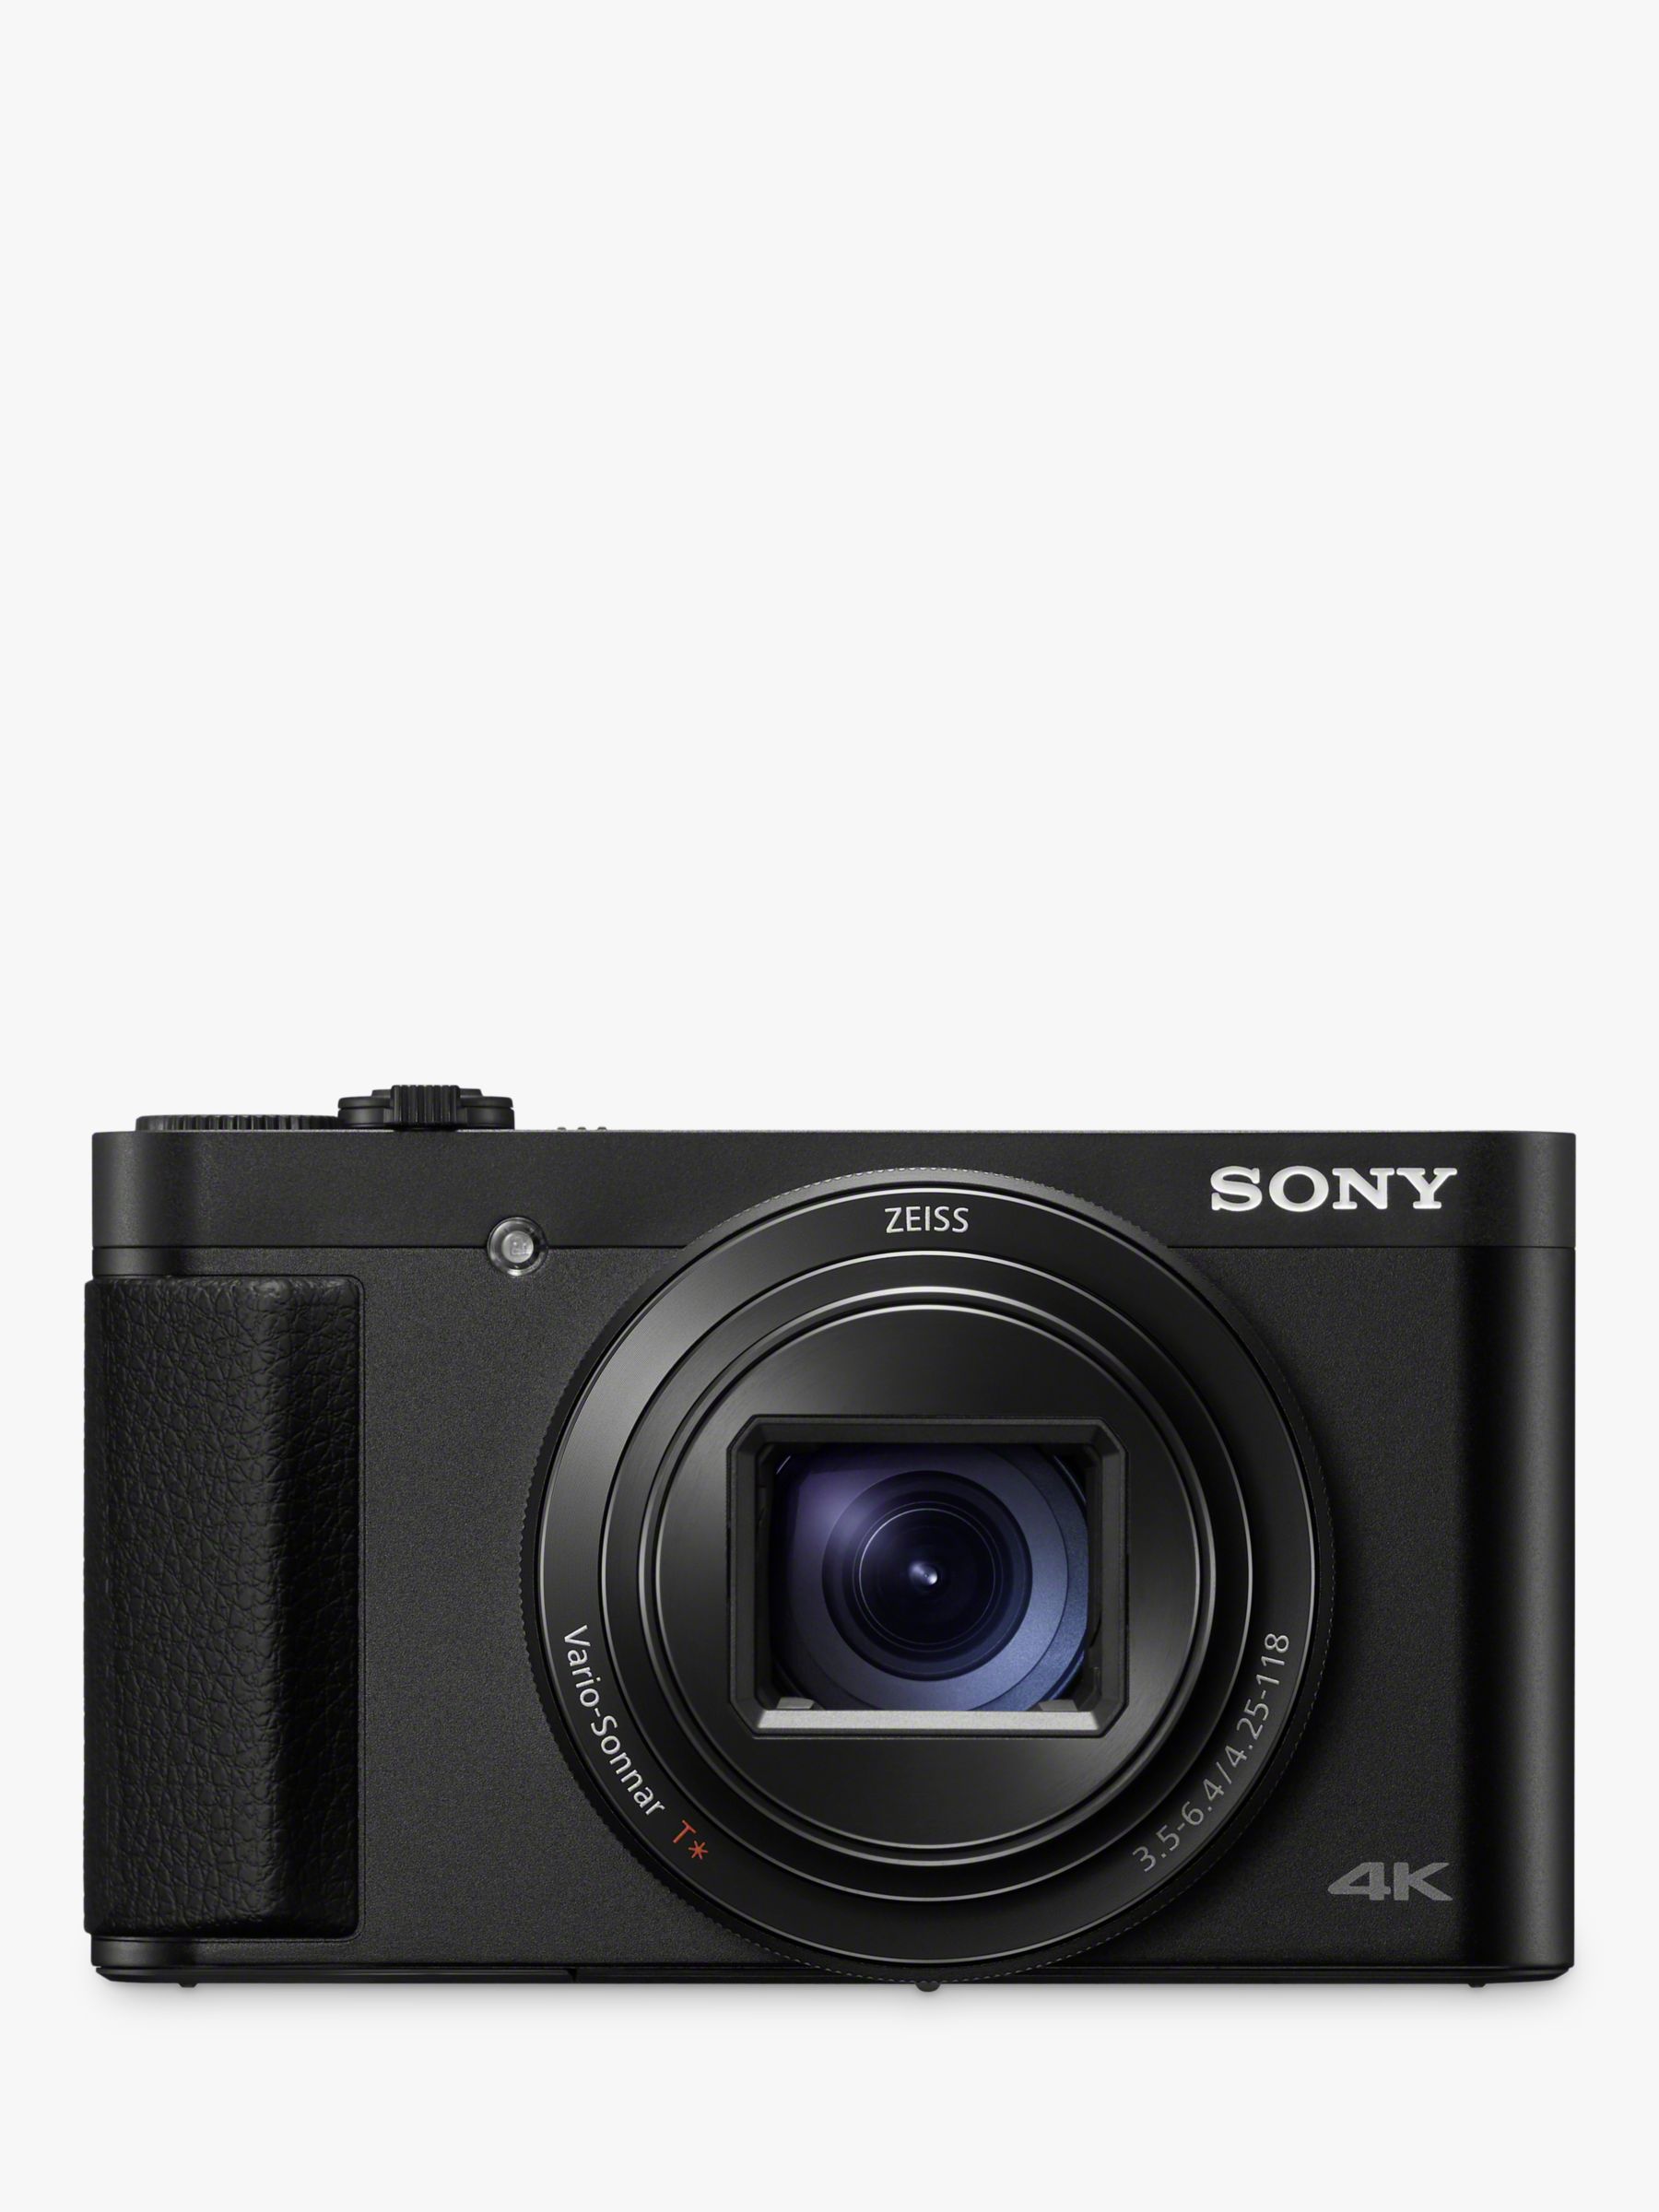 Sony Cyber-shot DSC-HX99 Camera, 4K Ultra HD, 18.2MP, 28x Optical Zoom, Wi-Fi, Bluetooth, NFC, OLED EVF, 3 Tilting Touch Screen